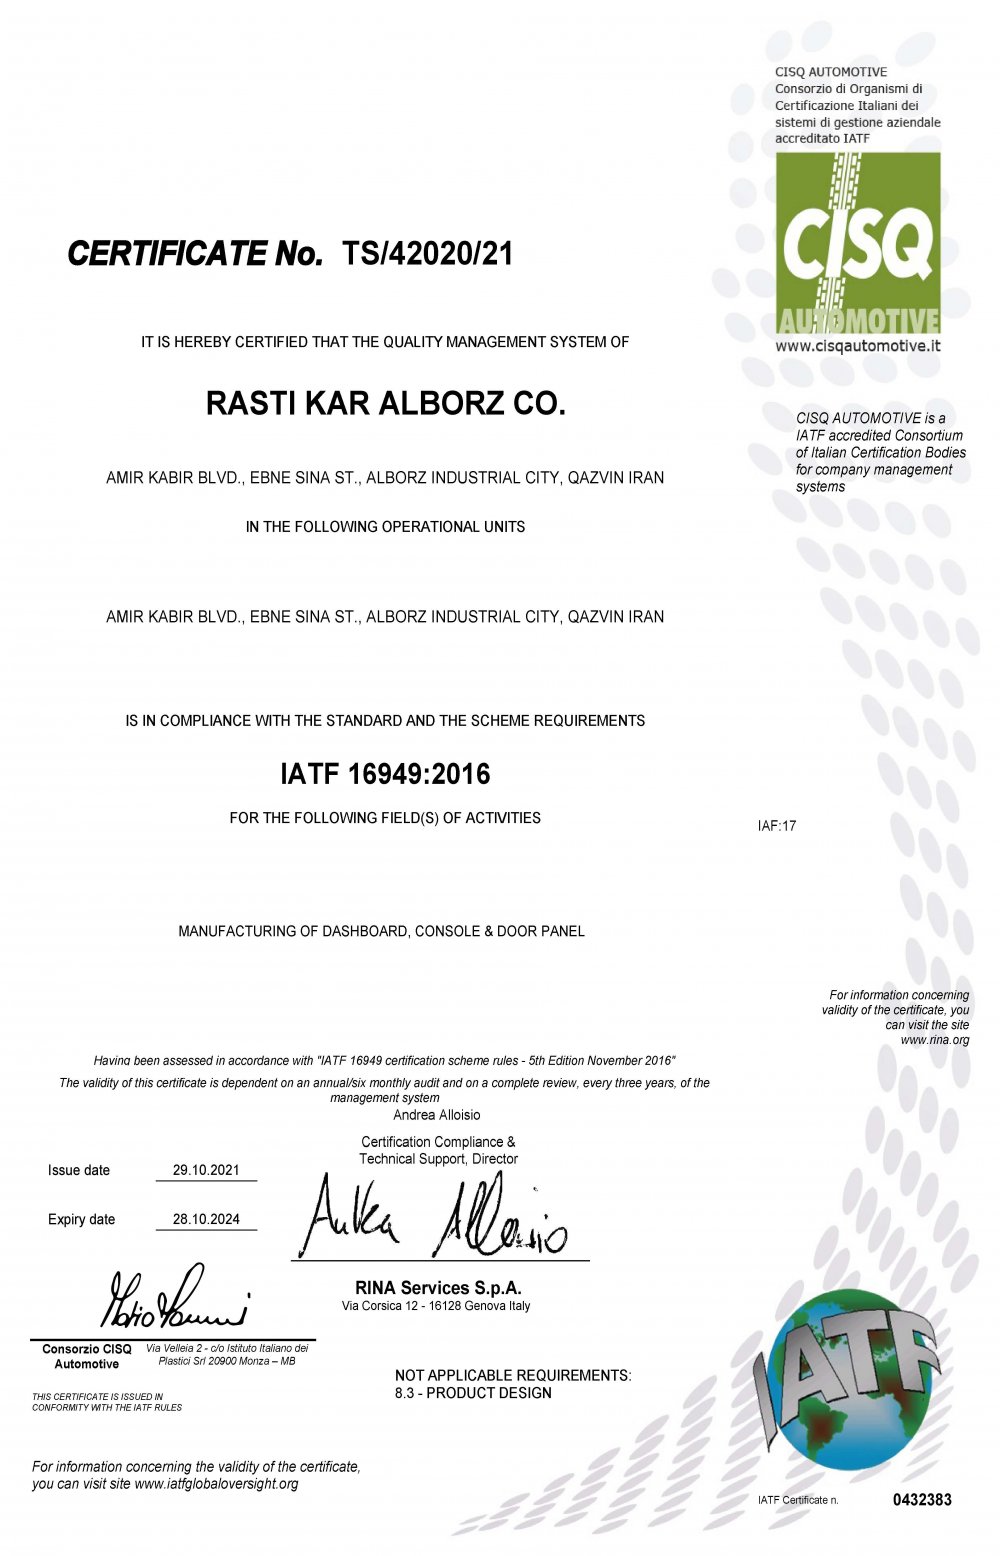  Certificate IATF Rasti Kar Alborz